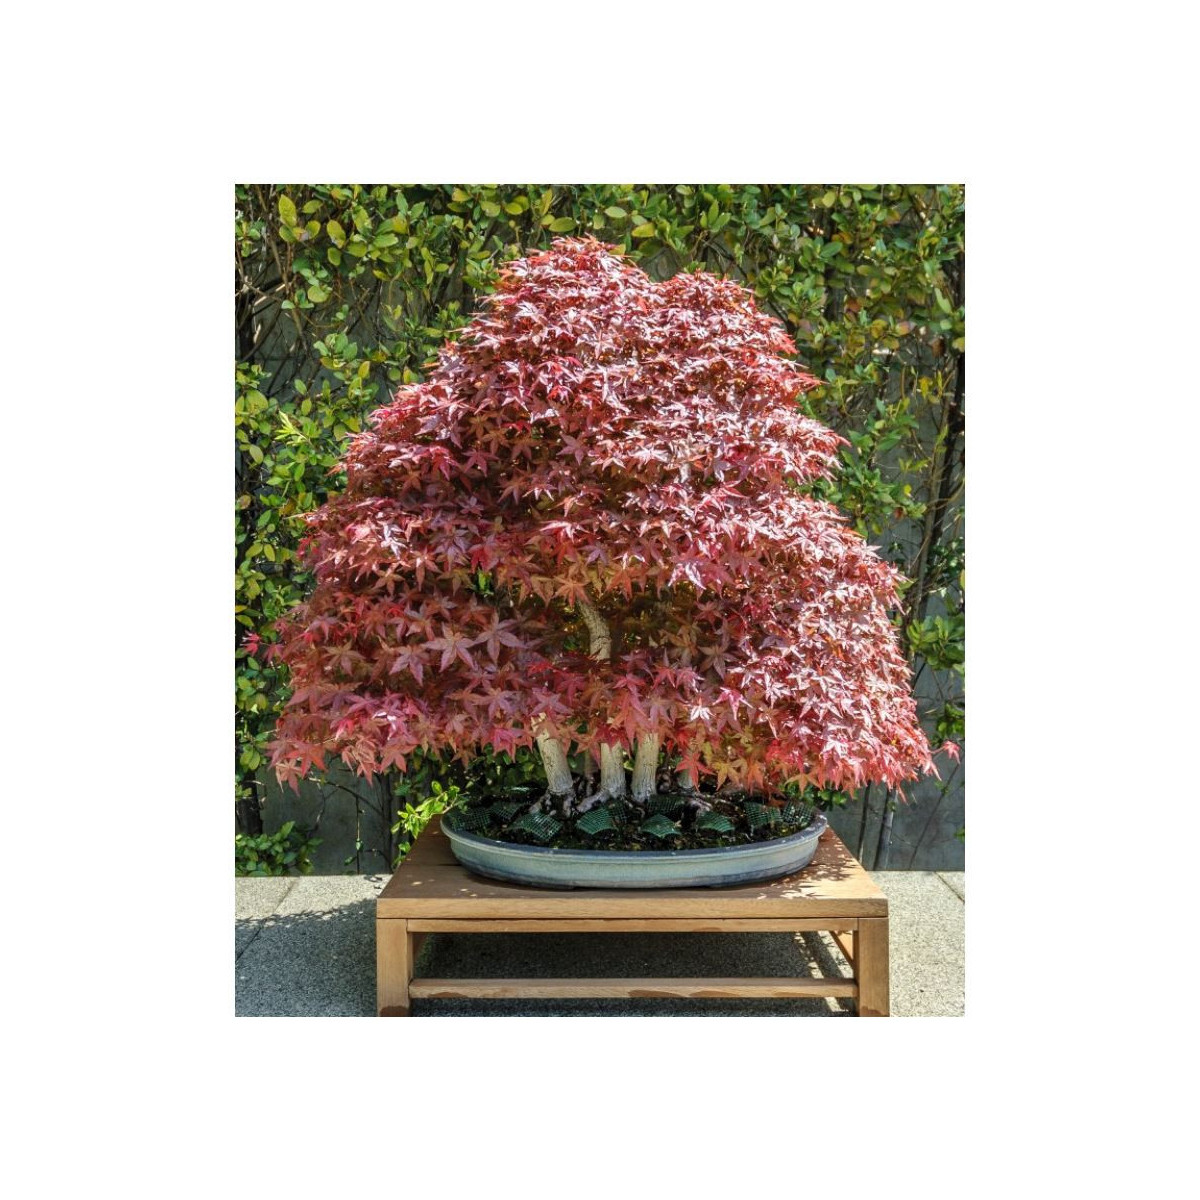 Javor japonský - Acer palmatum - semena - 5 ks